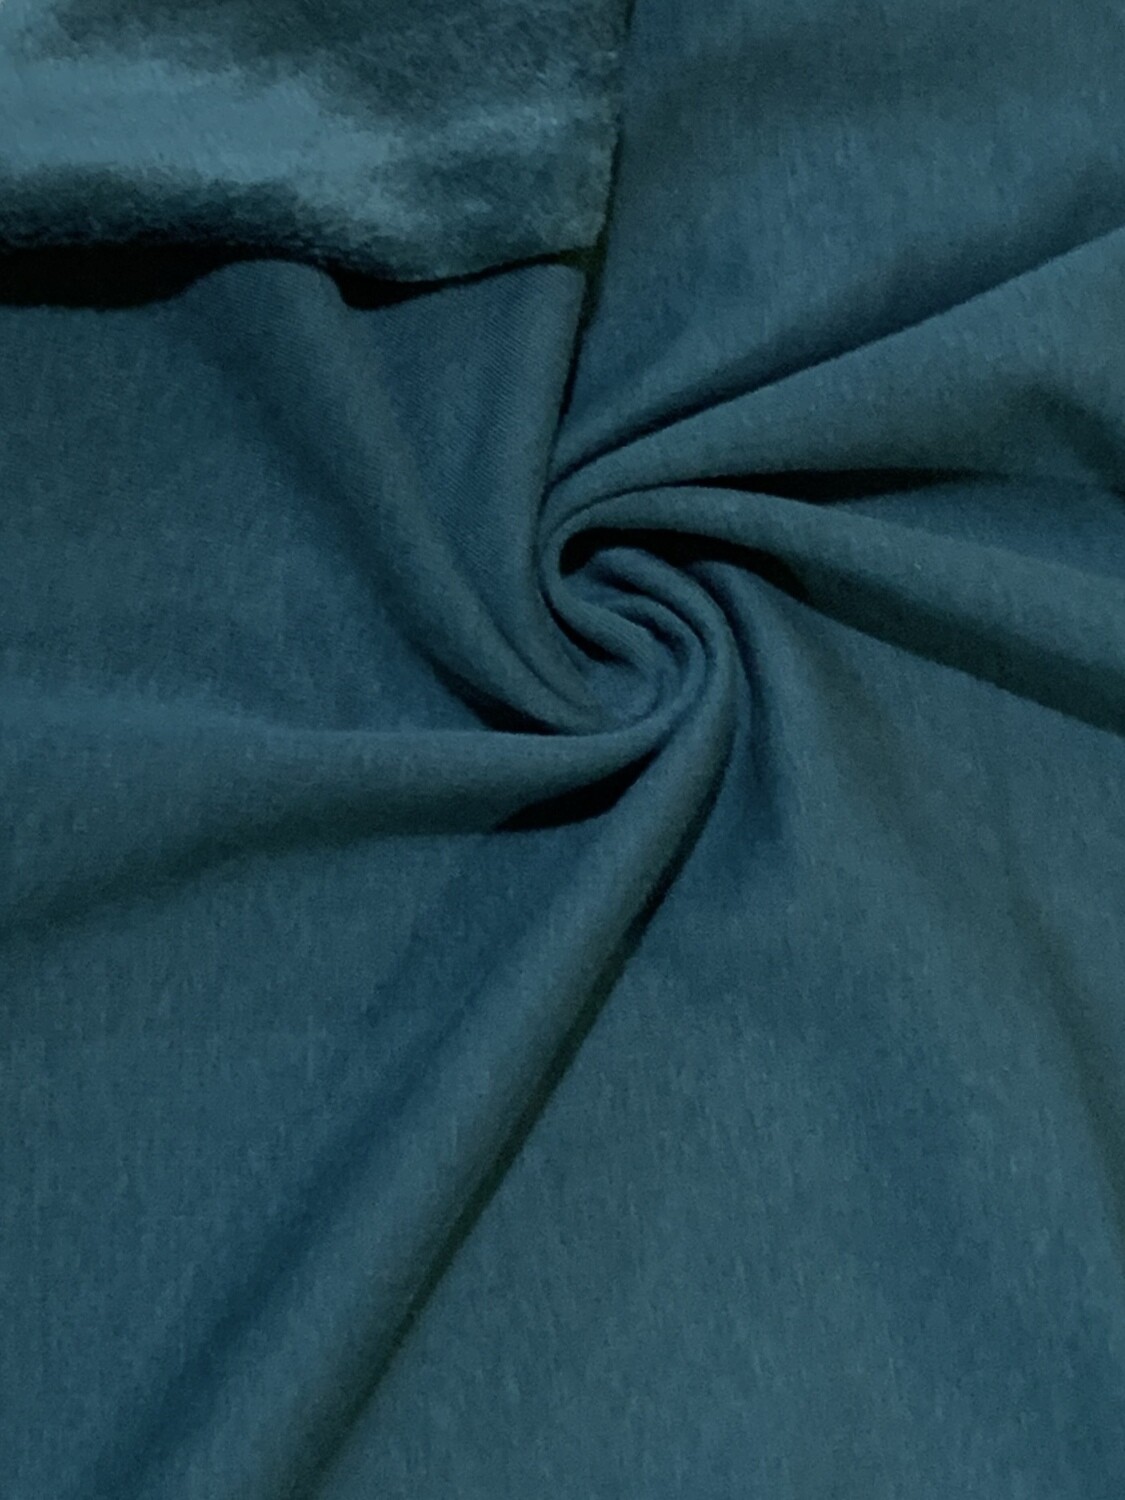 Dark Teal | Tracksuiting/Sweatshirt French Terry Fleece | 185cm Wide - 0.4m Piece